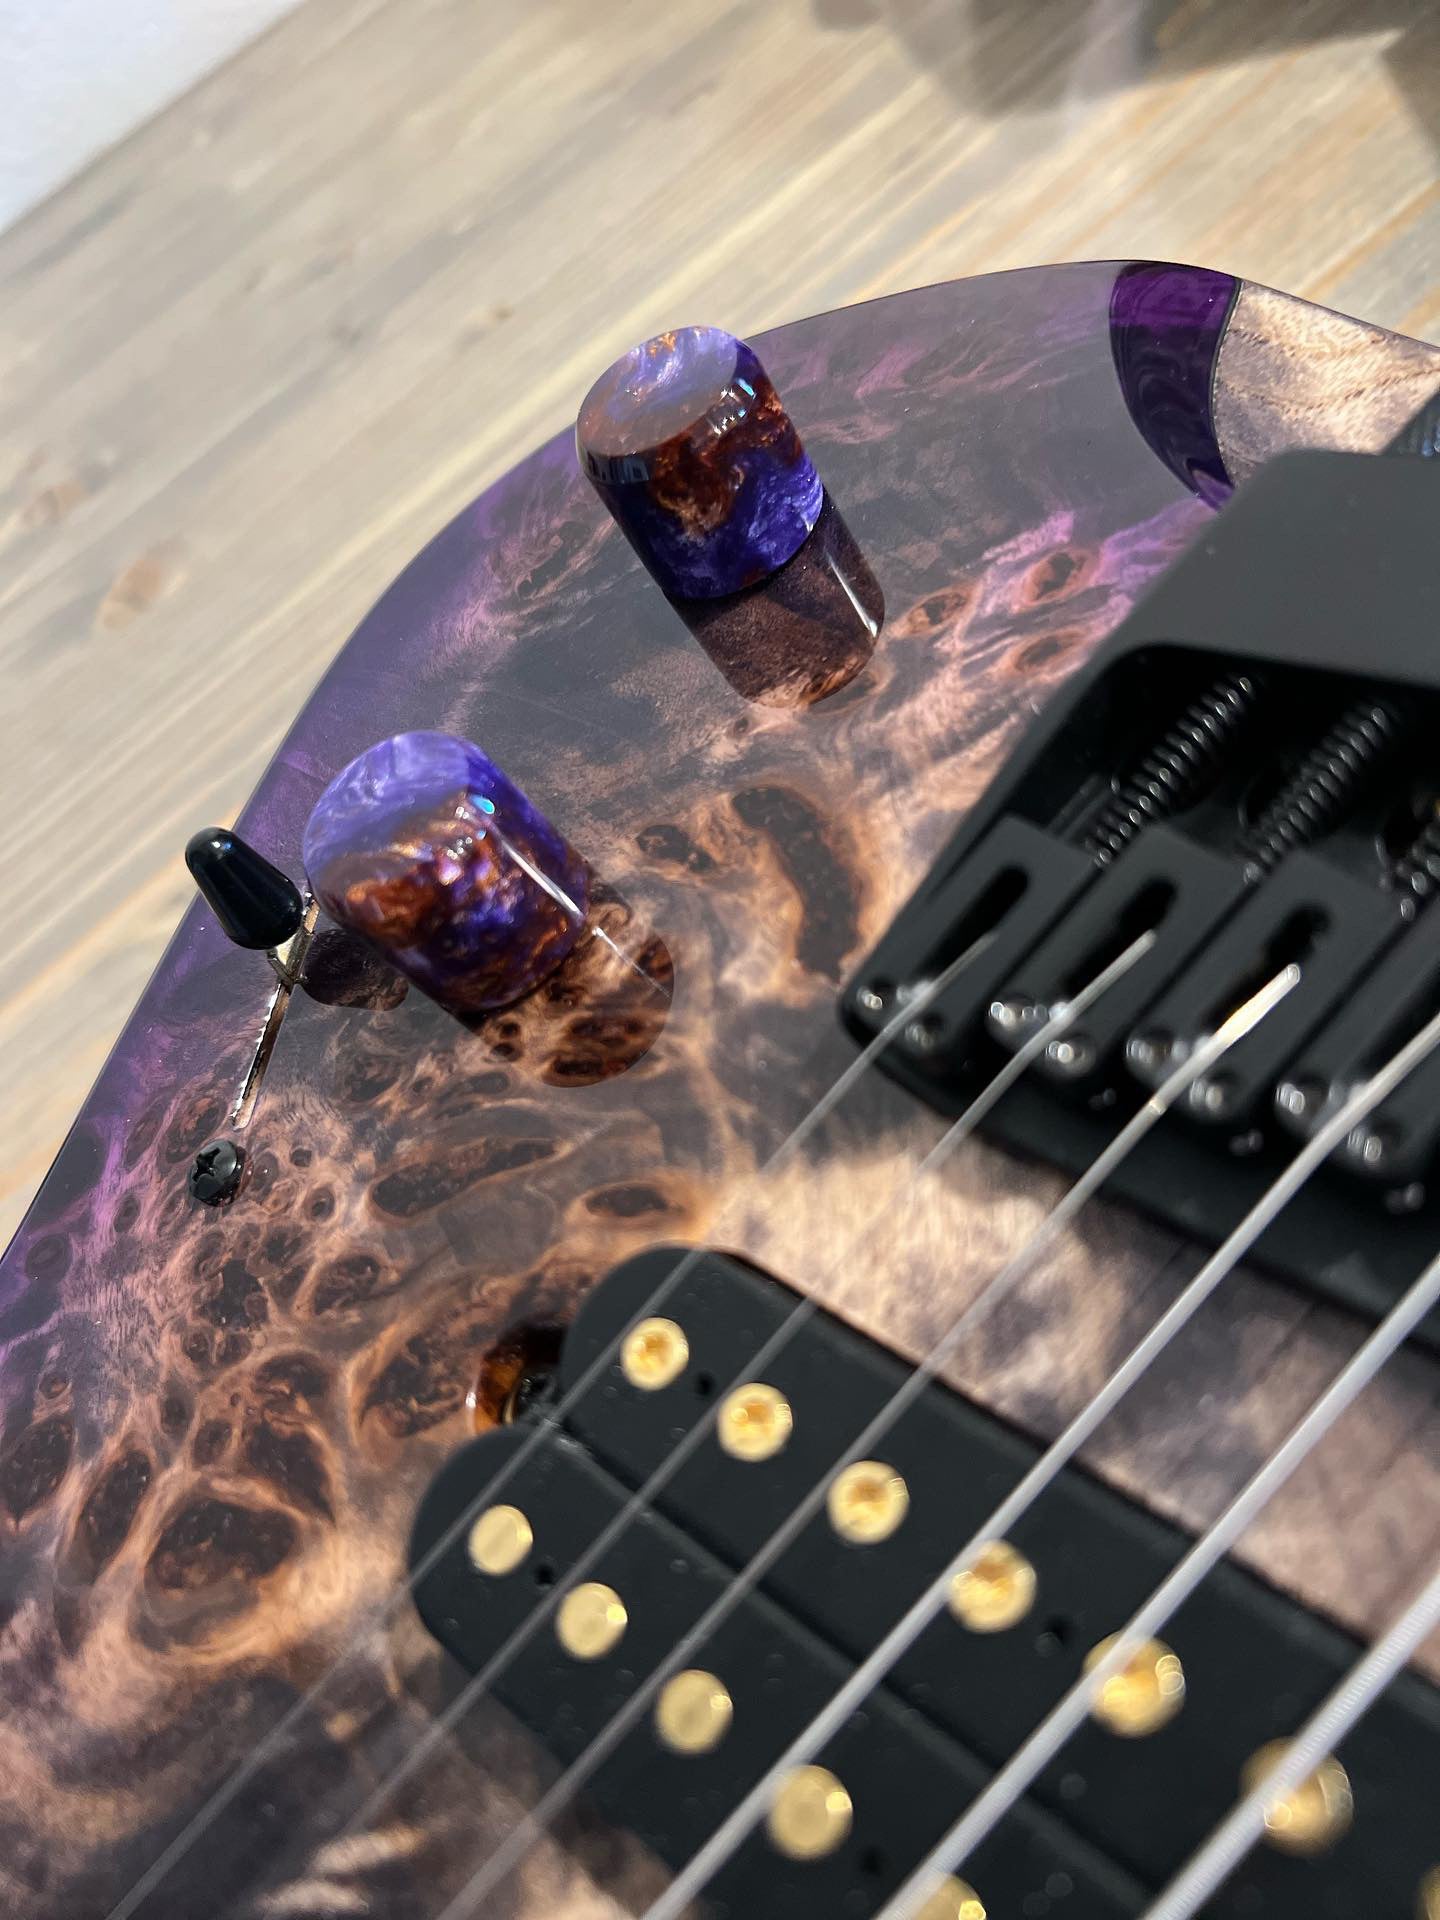 Custom “A1X" Guitar and Bass Volume knob Set